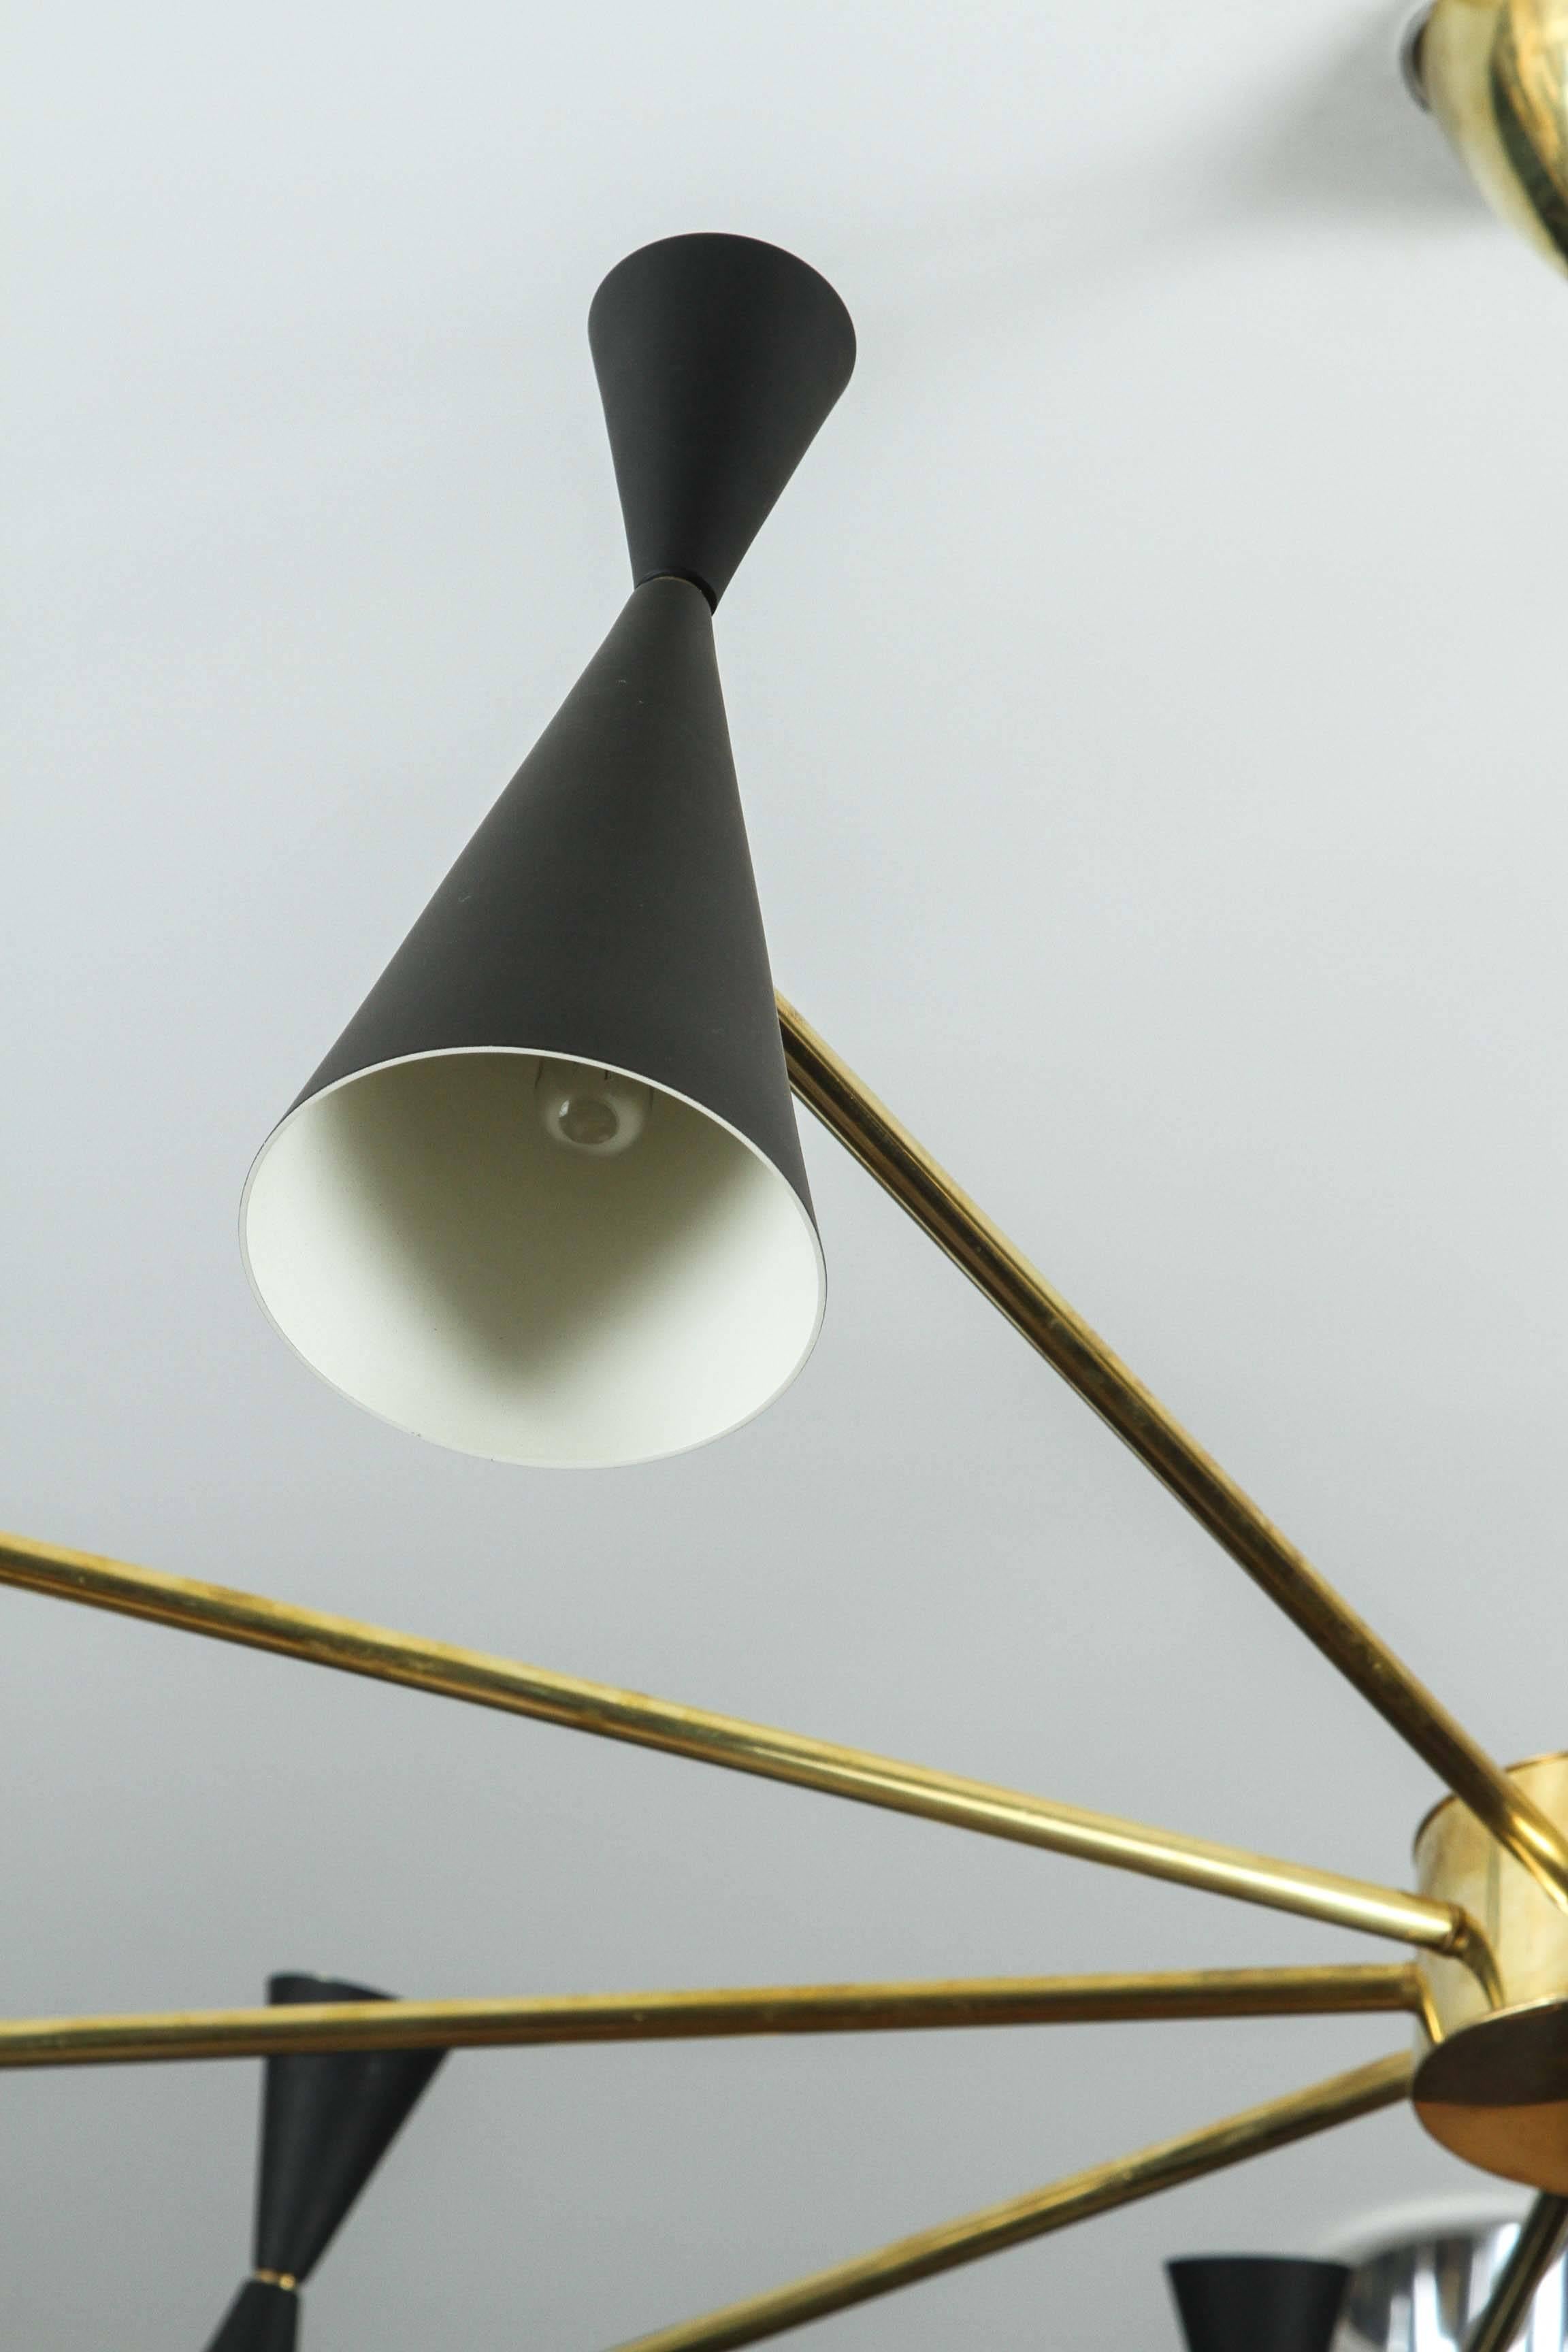 Radial chandelier in the style of Arteluce.